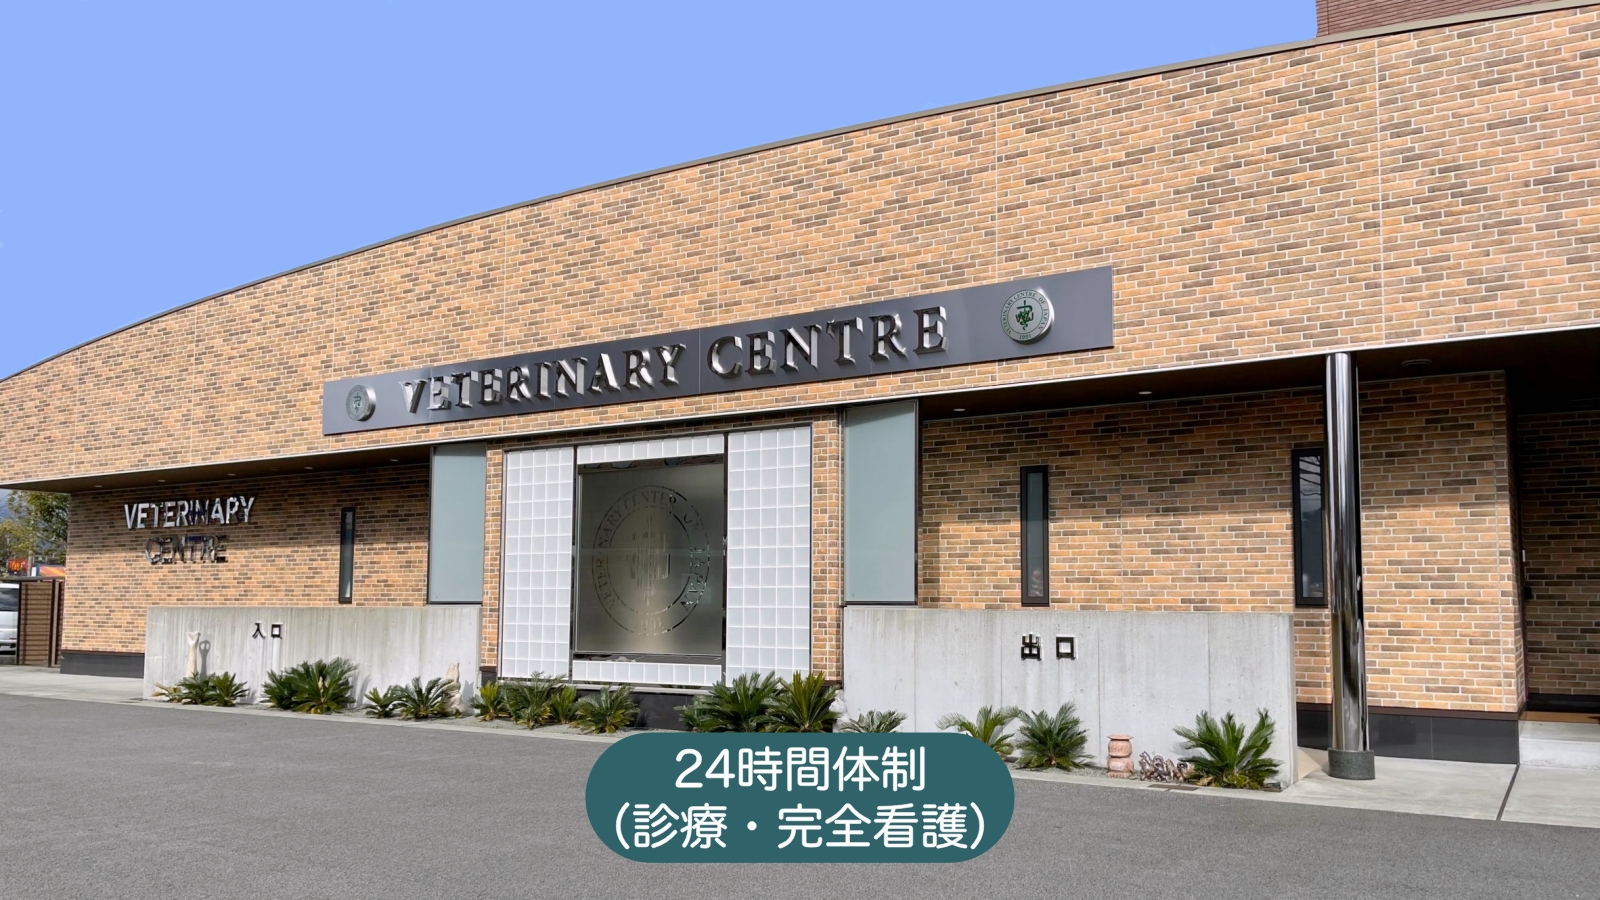 VCJ動物医療センター駿河病院